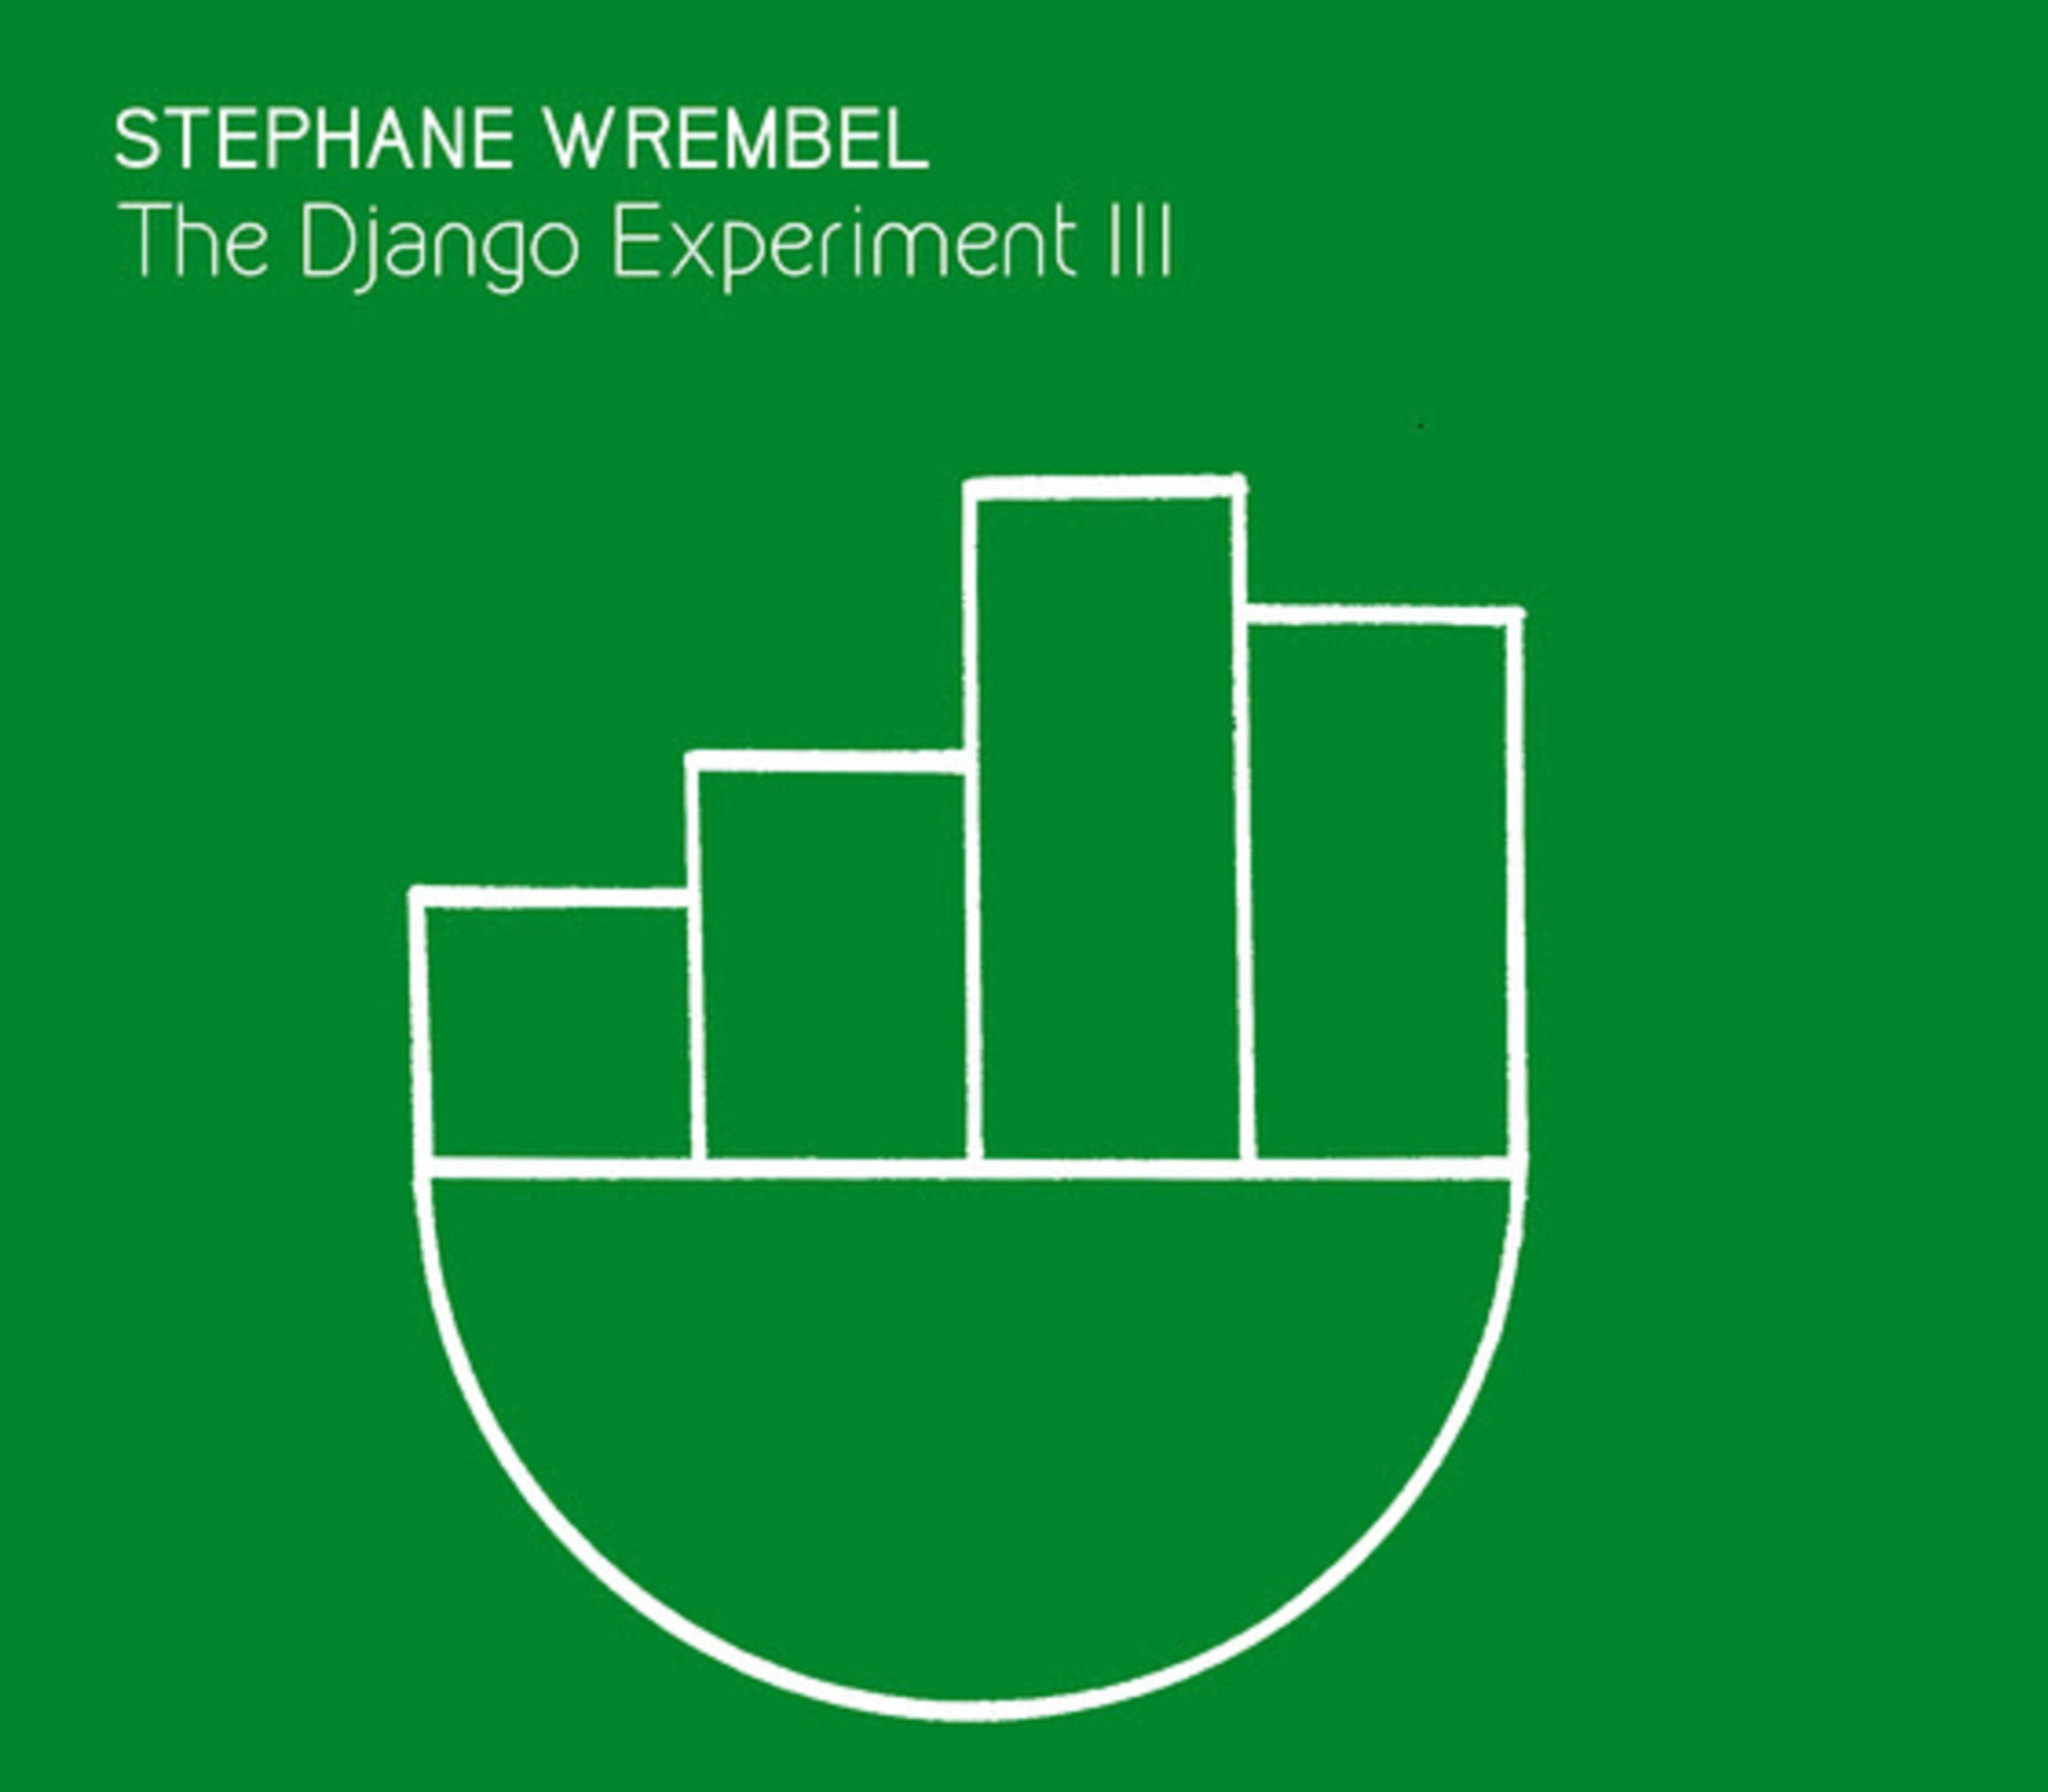 Stephane Wrembel to release The Django Experiment III